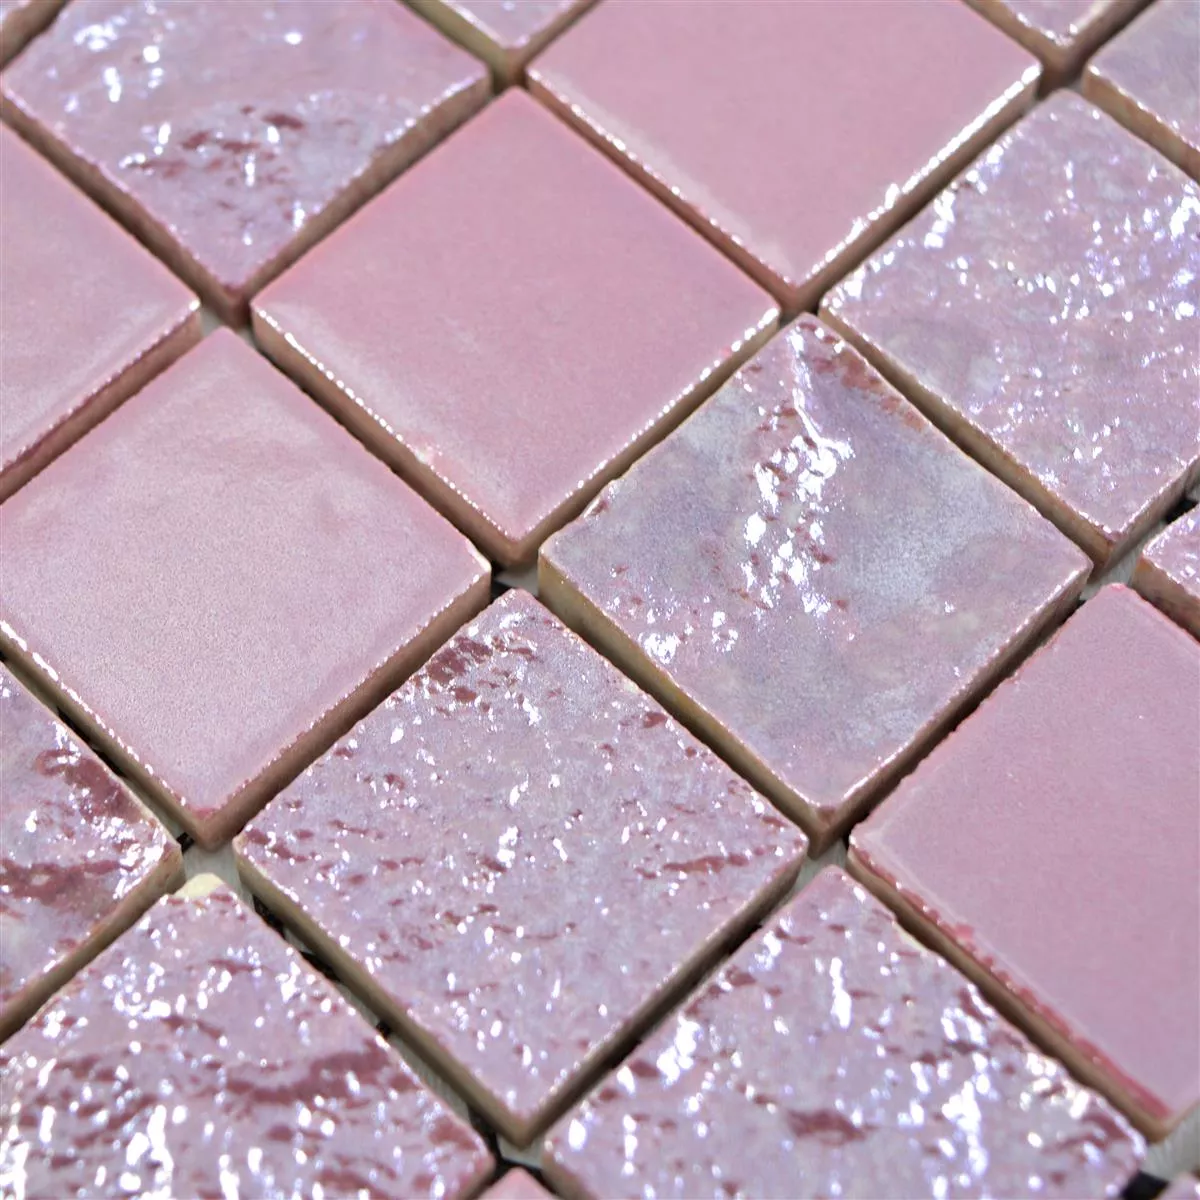 Sample Ceramic Mosaic Tiles Shogun 3D Pink